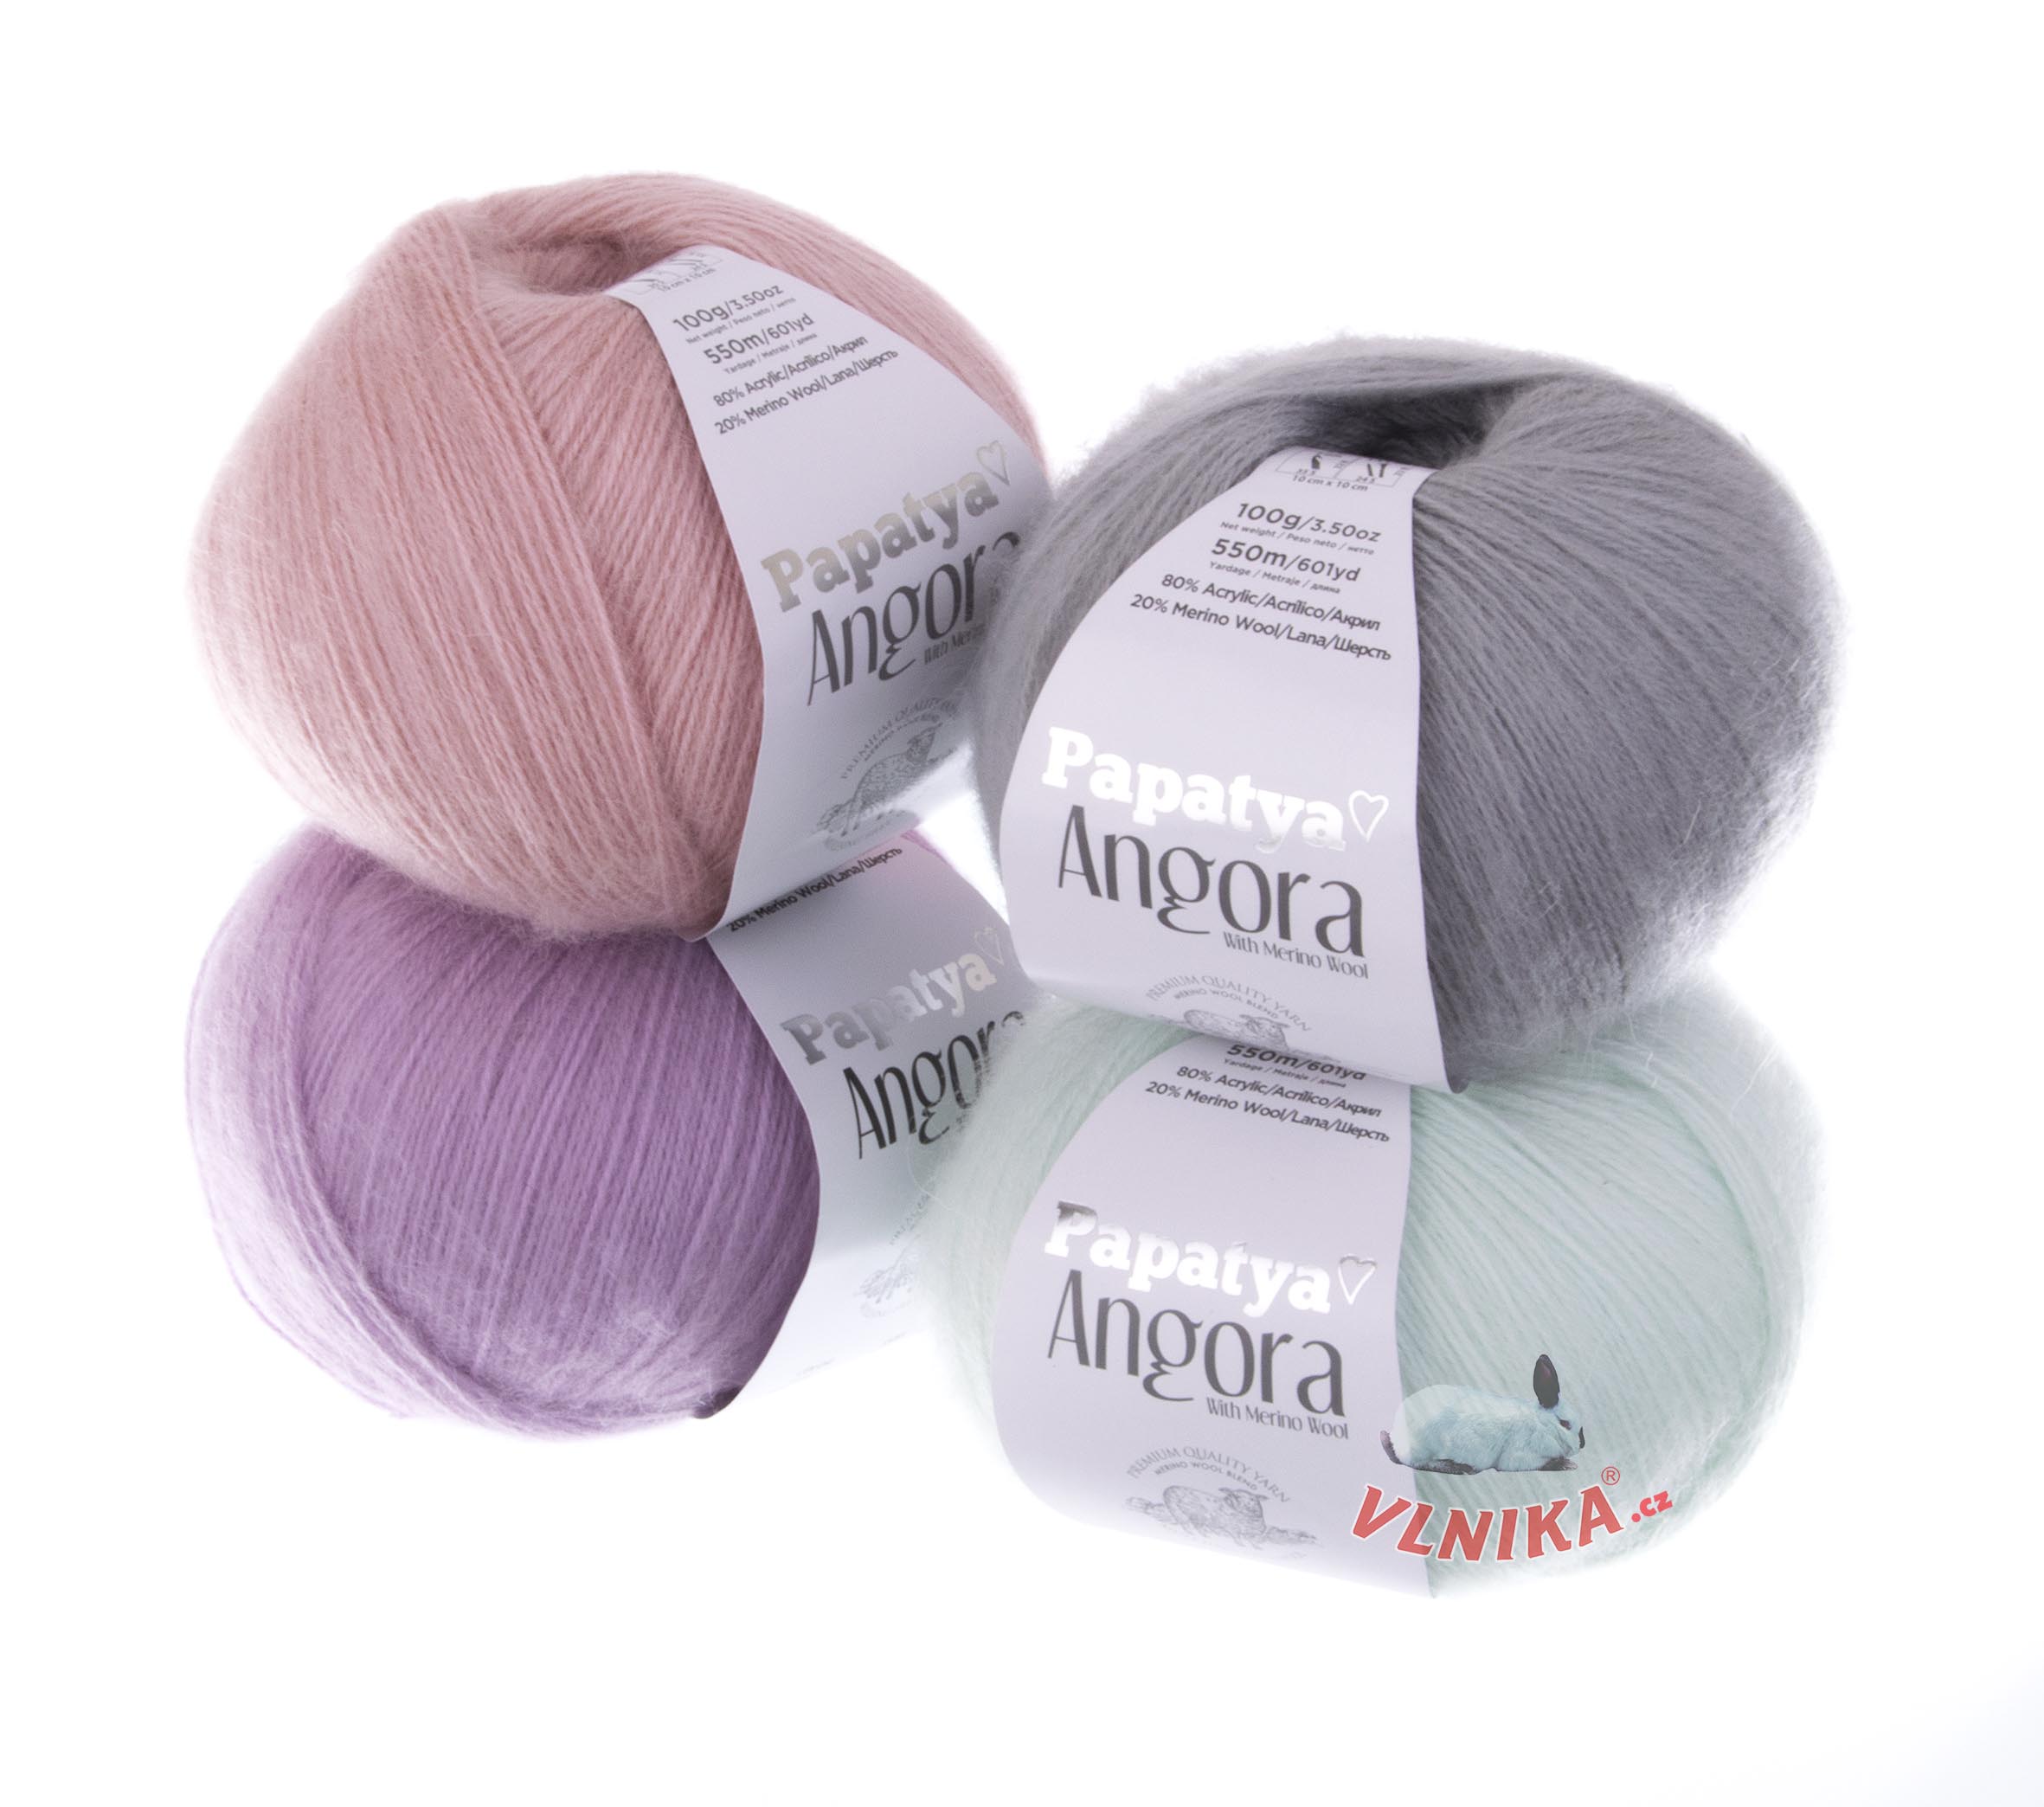 Papatya Roving Yarn  Vlnika - yarn, wool warehouse - buy all of